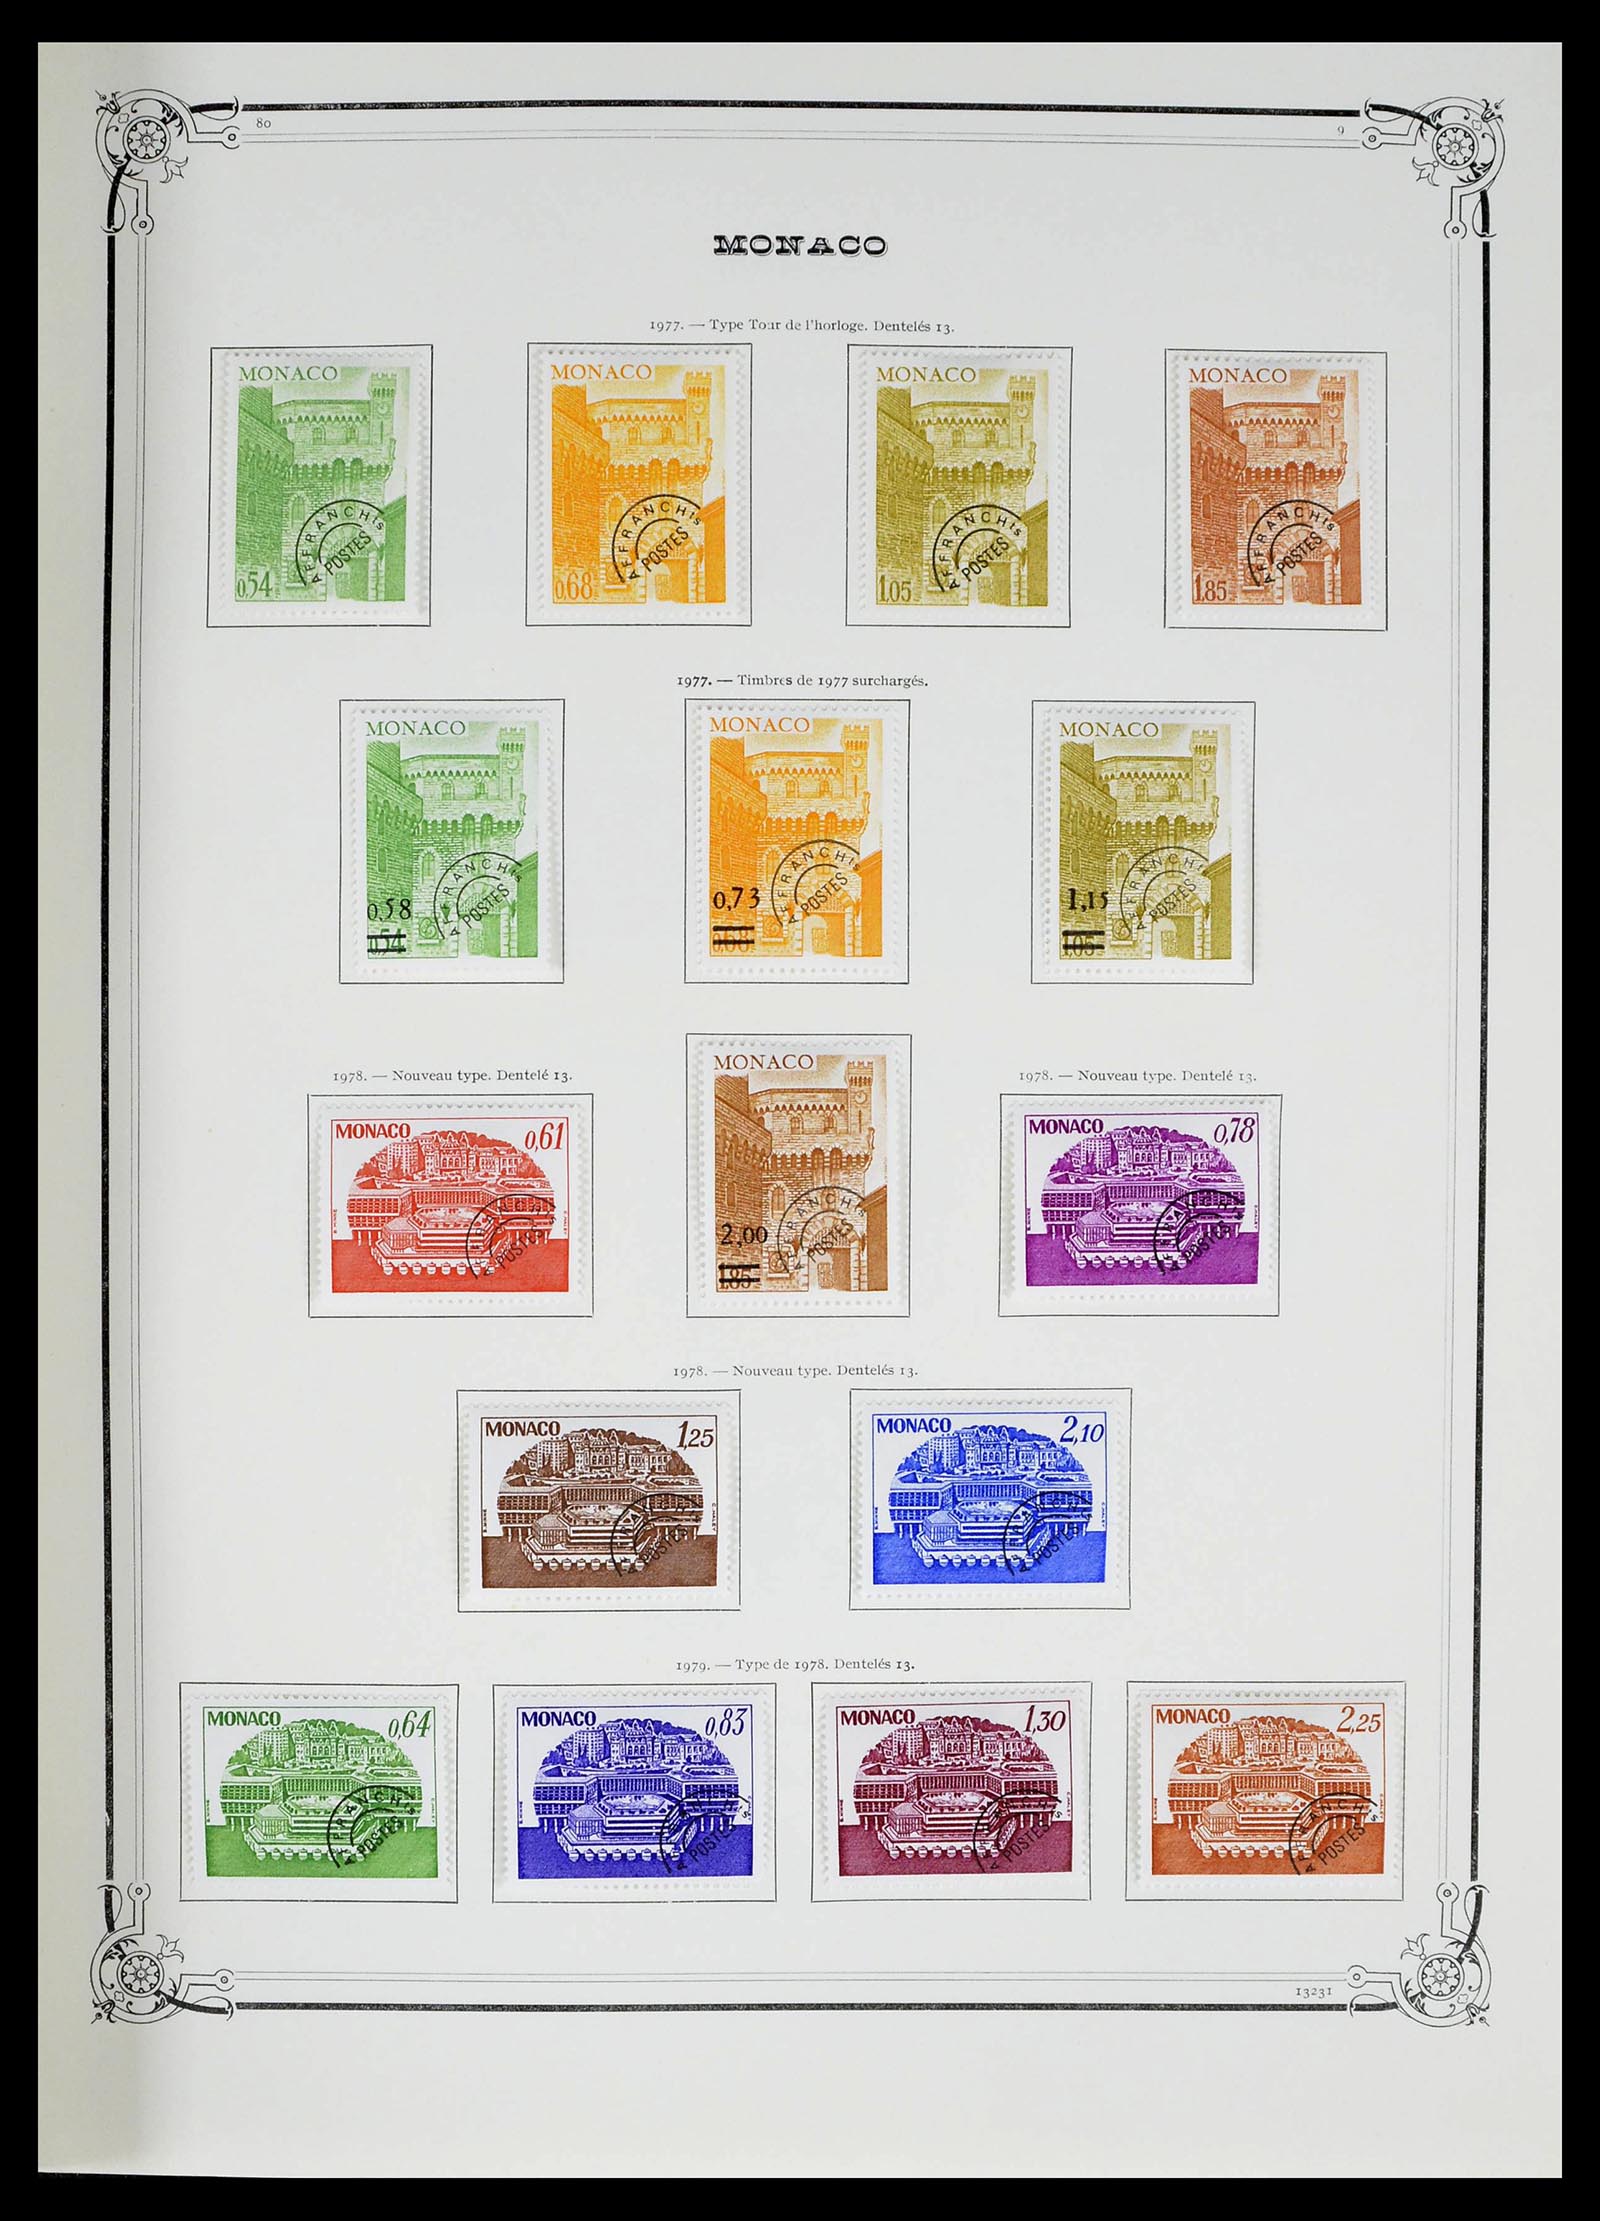 39133 0076 - Stamp collection 39133 Monaco 1885-1996.